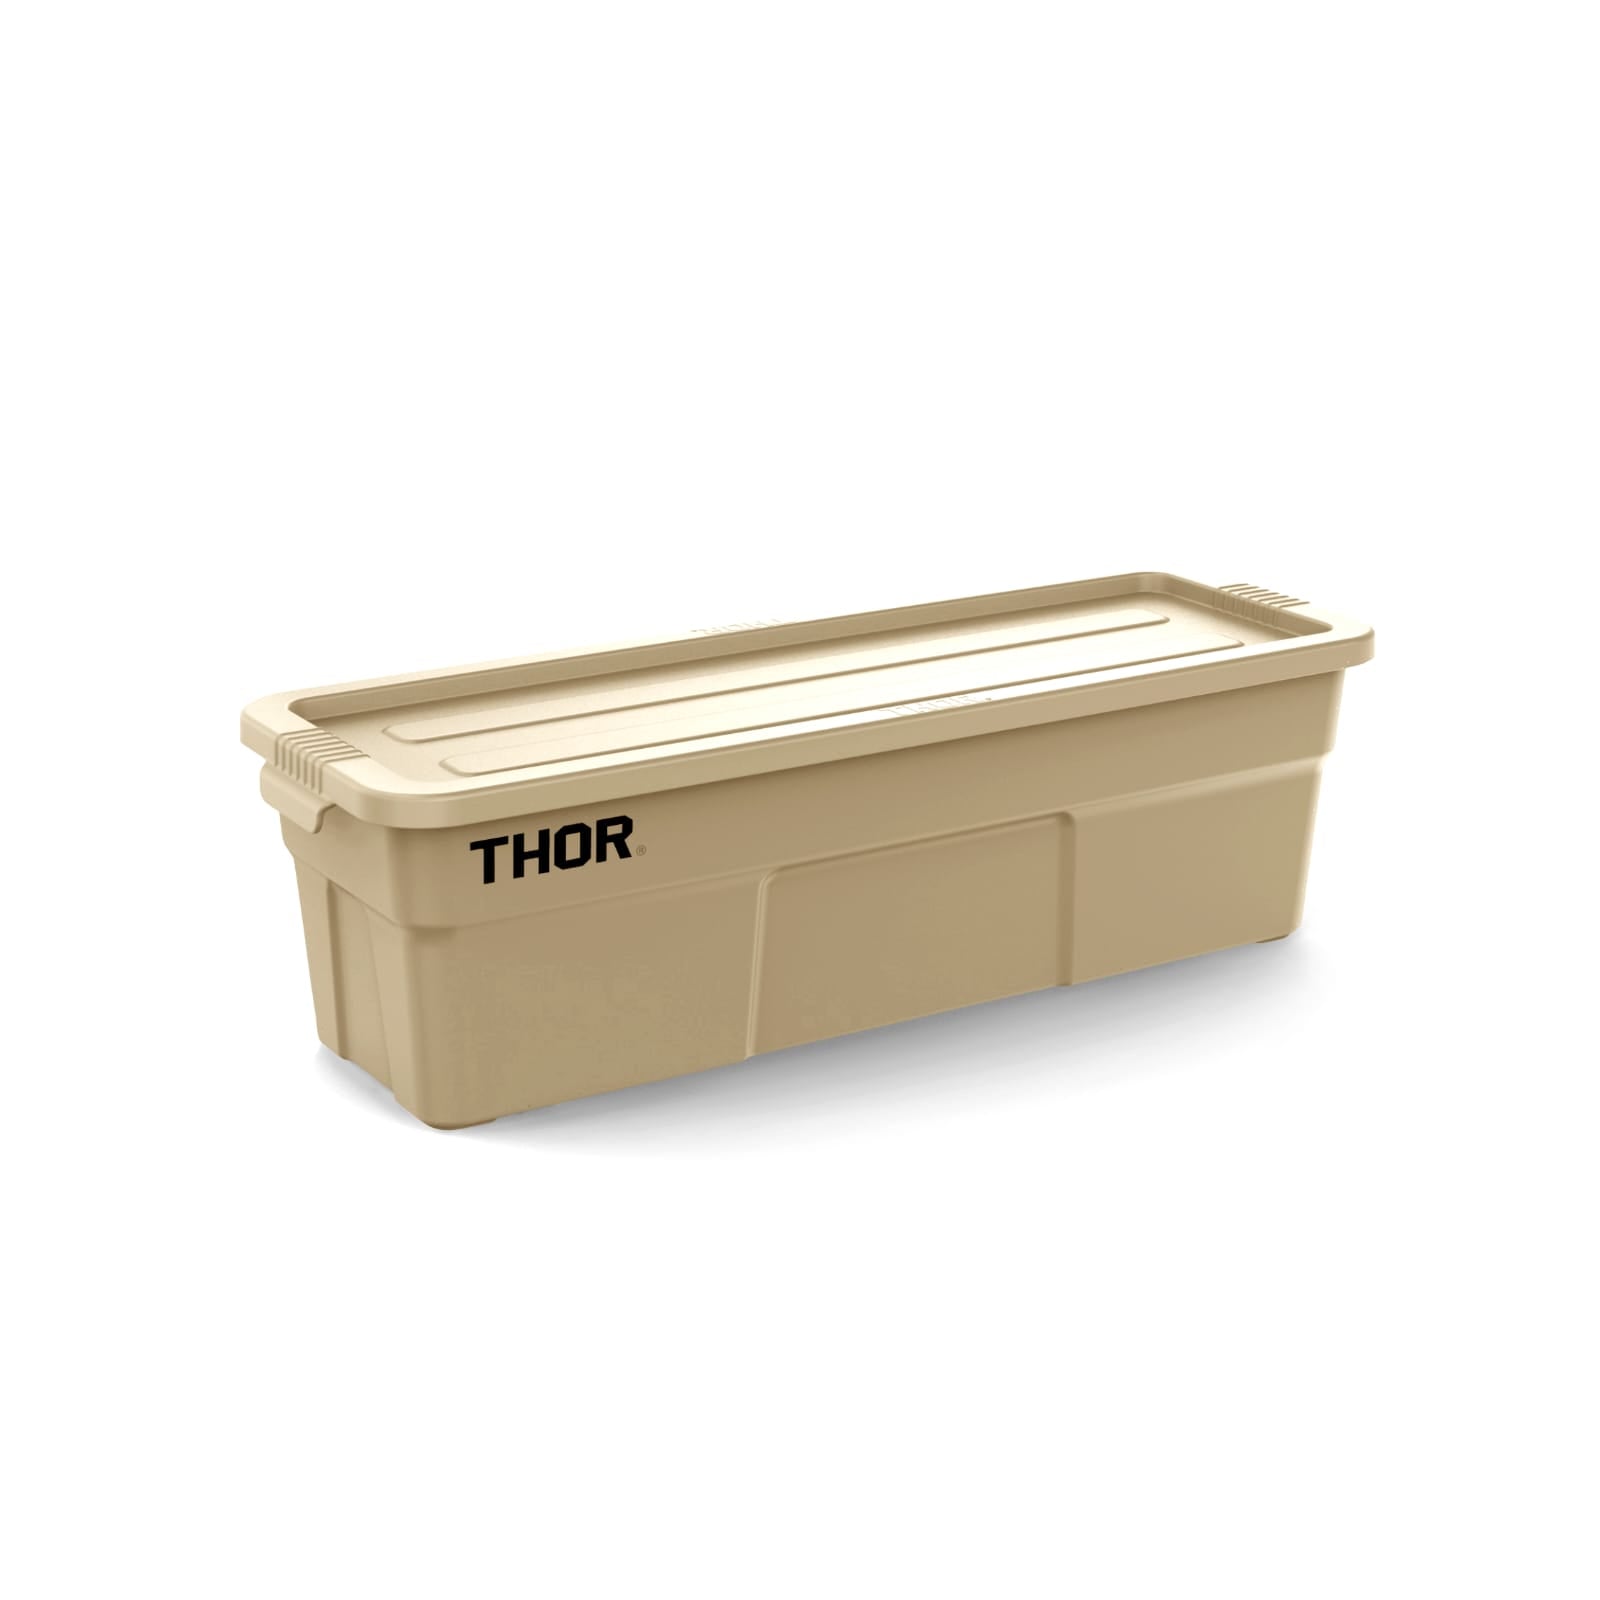 Detail Thor Large Totes With Lid Storage Box (Black/75L) - Shop goodforit  Storage - Pinkoi